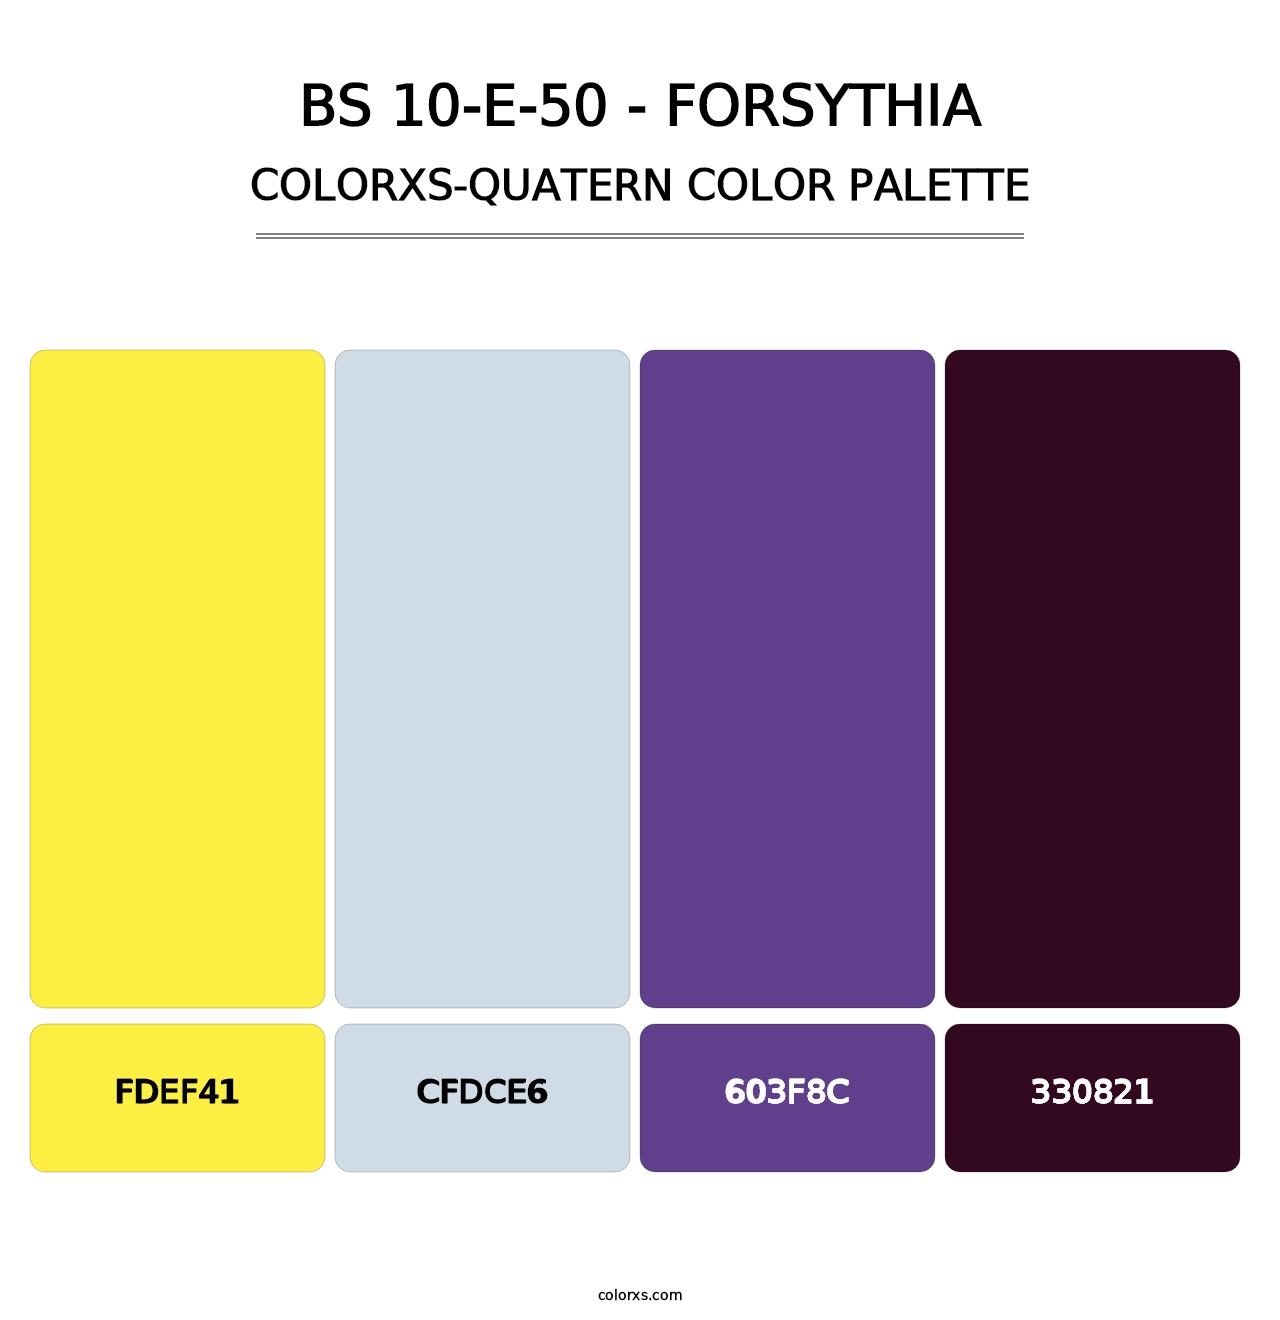 BS 10-E-50 - Forsythia - Colorxs Quatern Palette